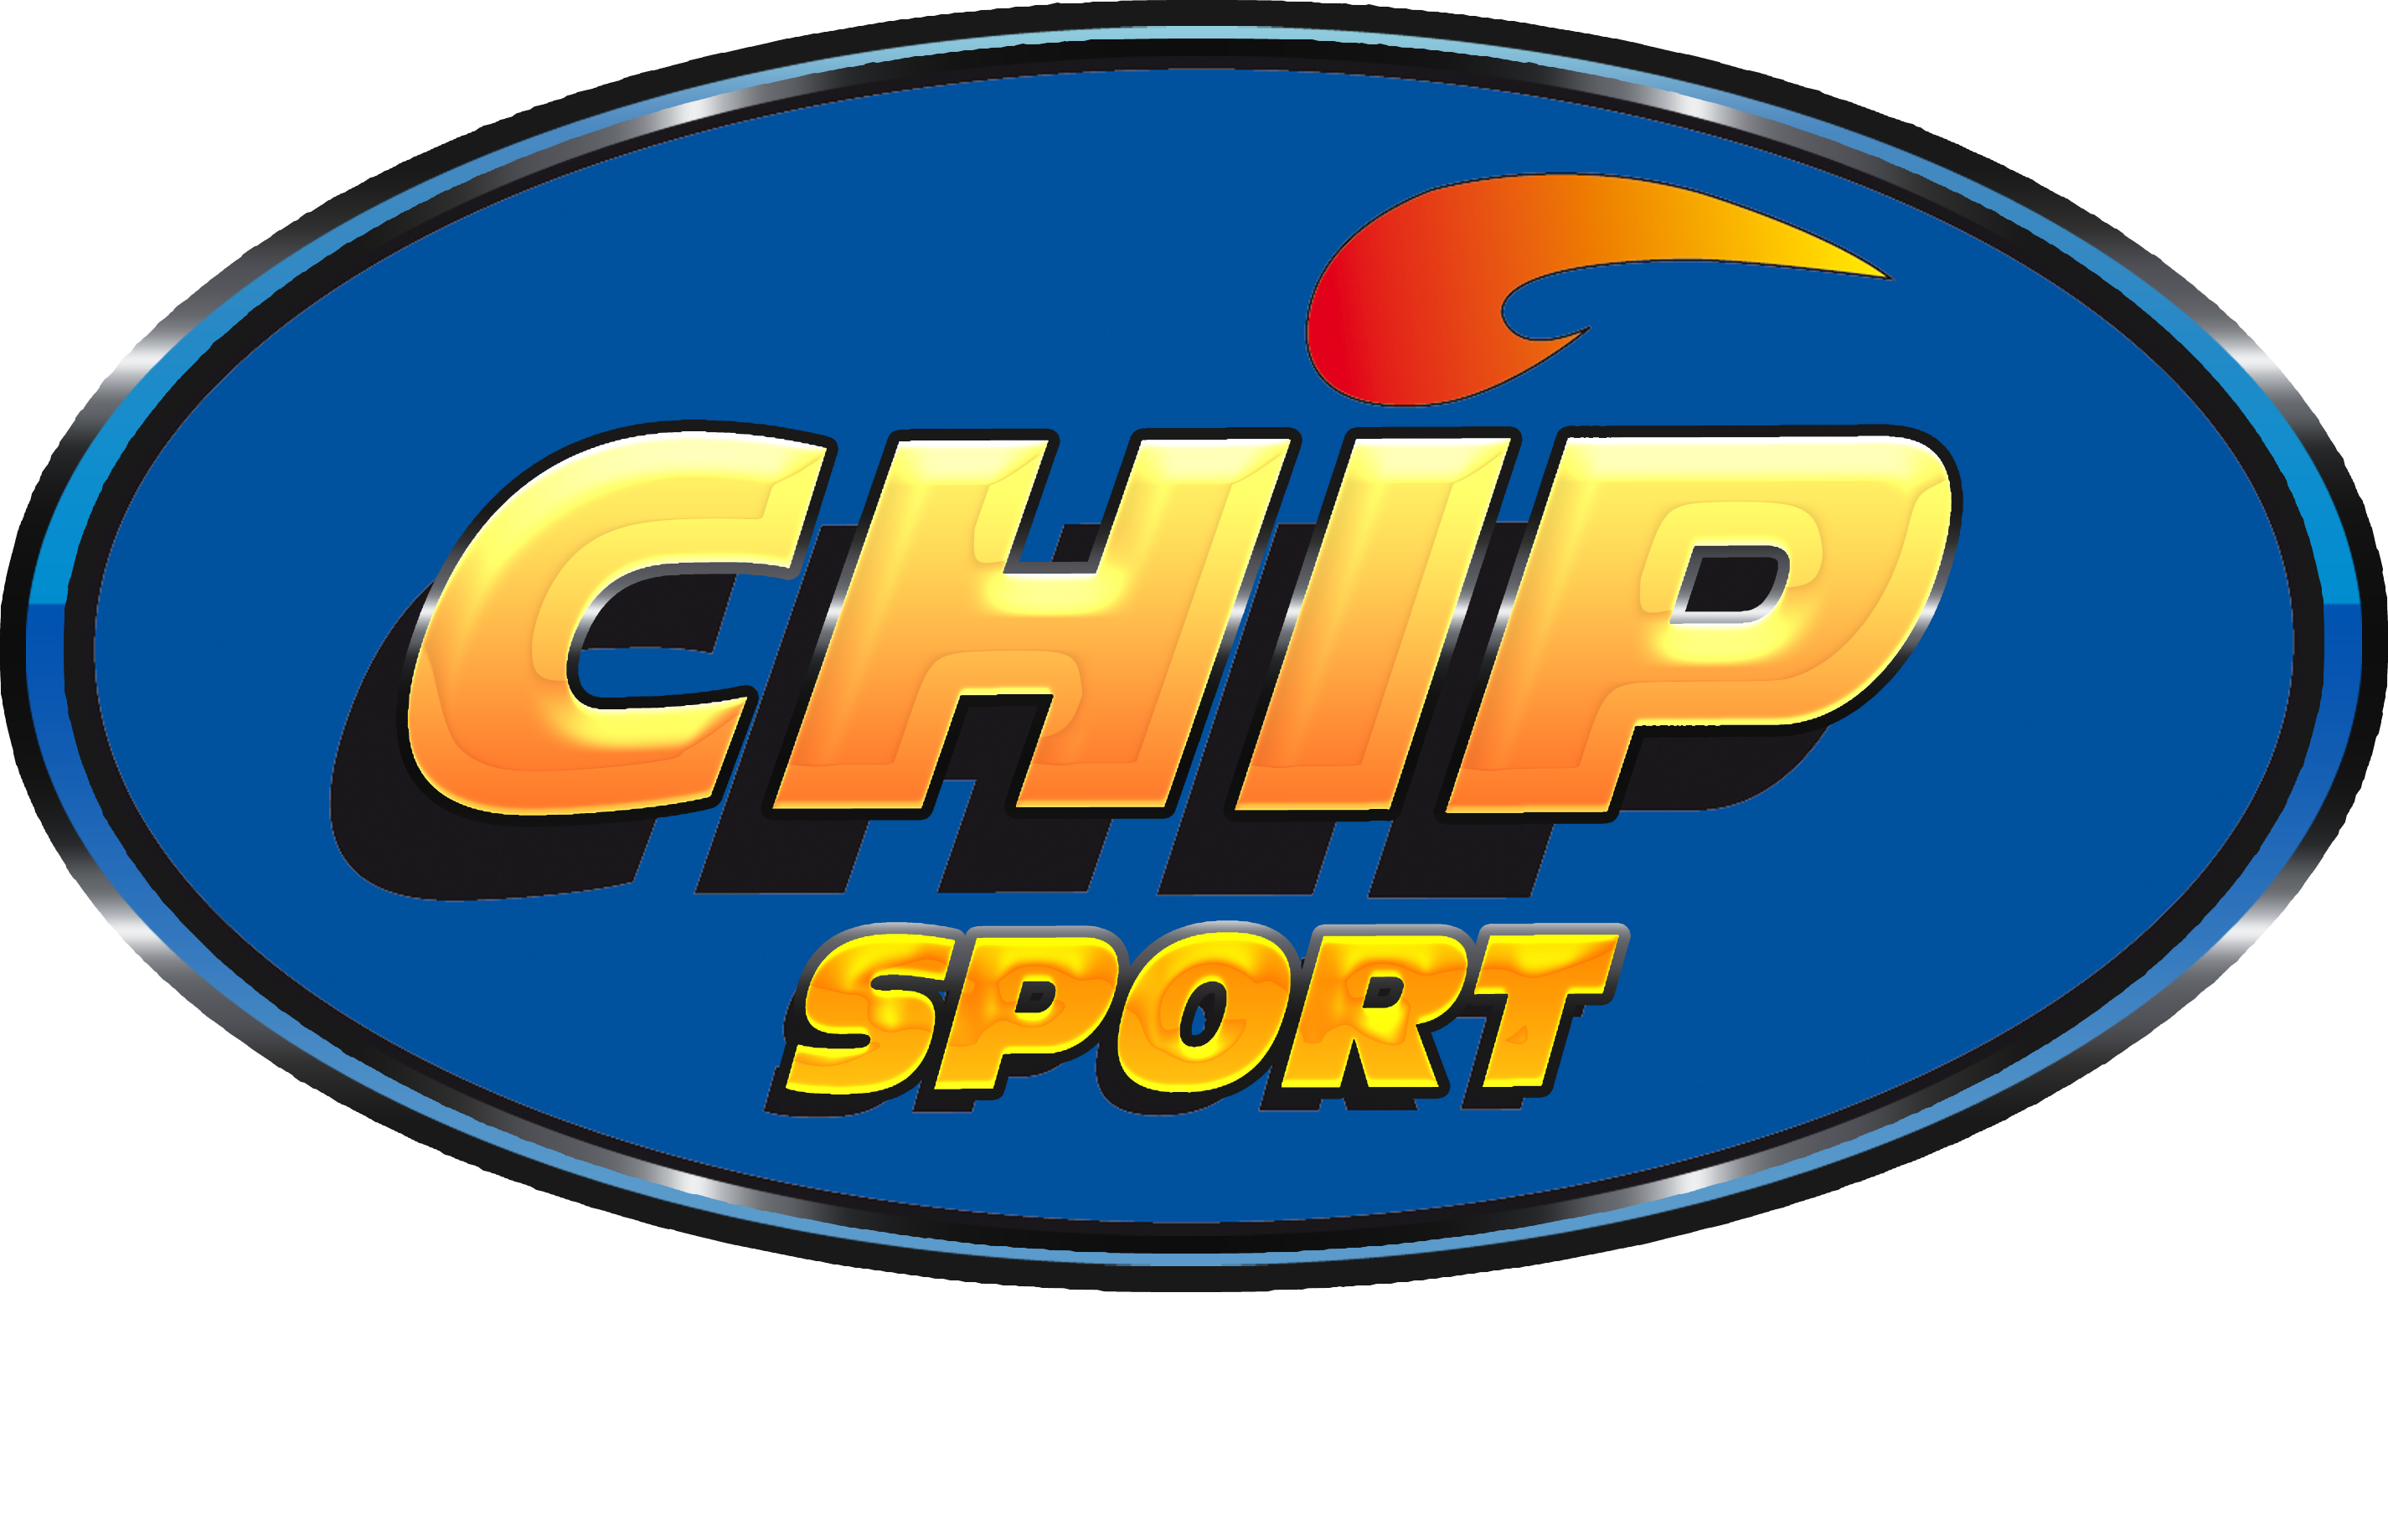 Chip Sport